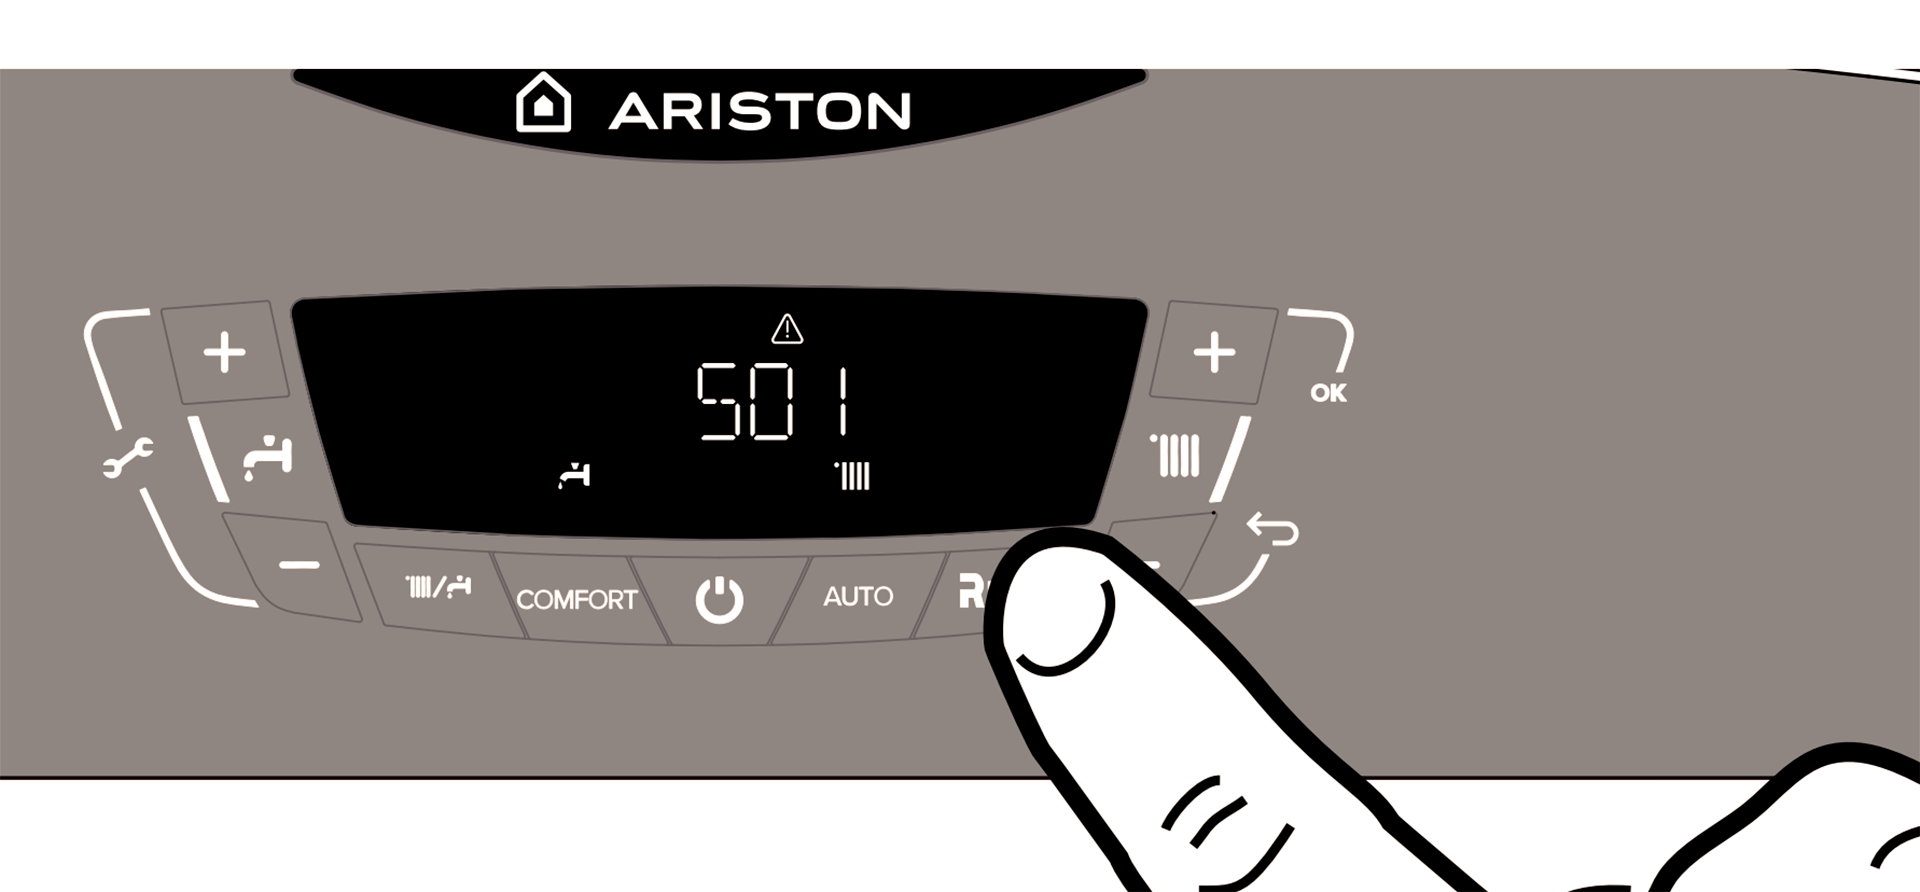 Ariston Error 501. Ariston one condensing Tech.